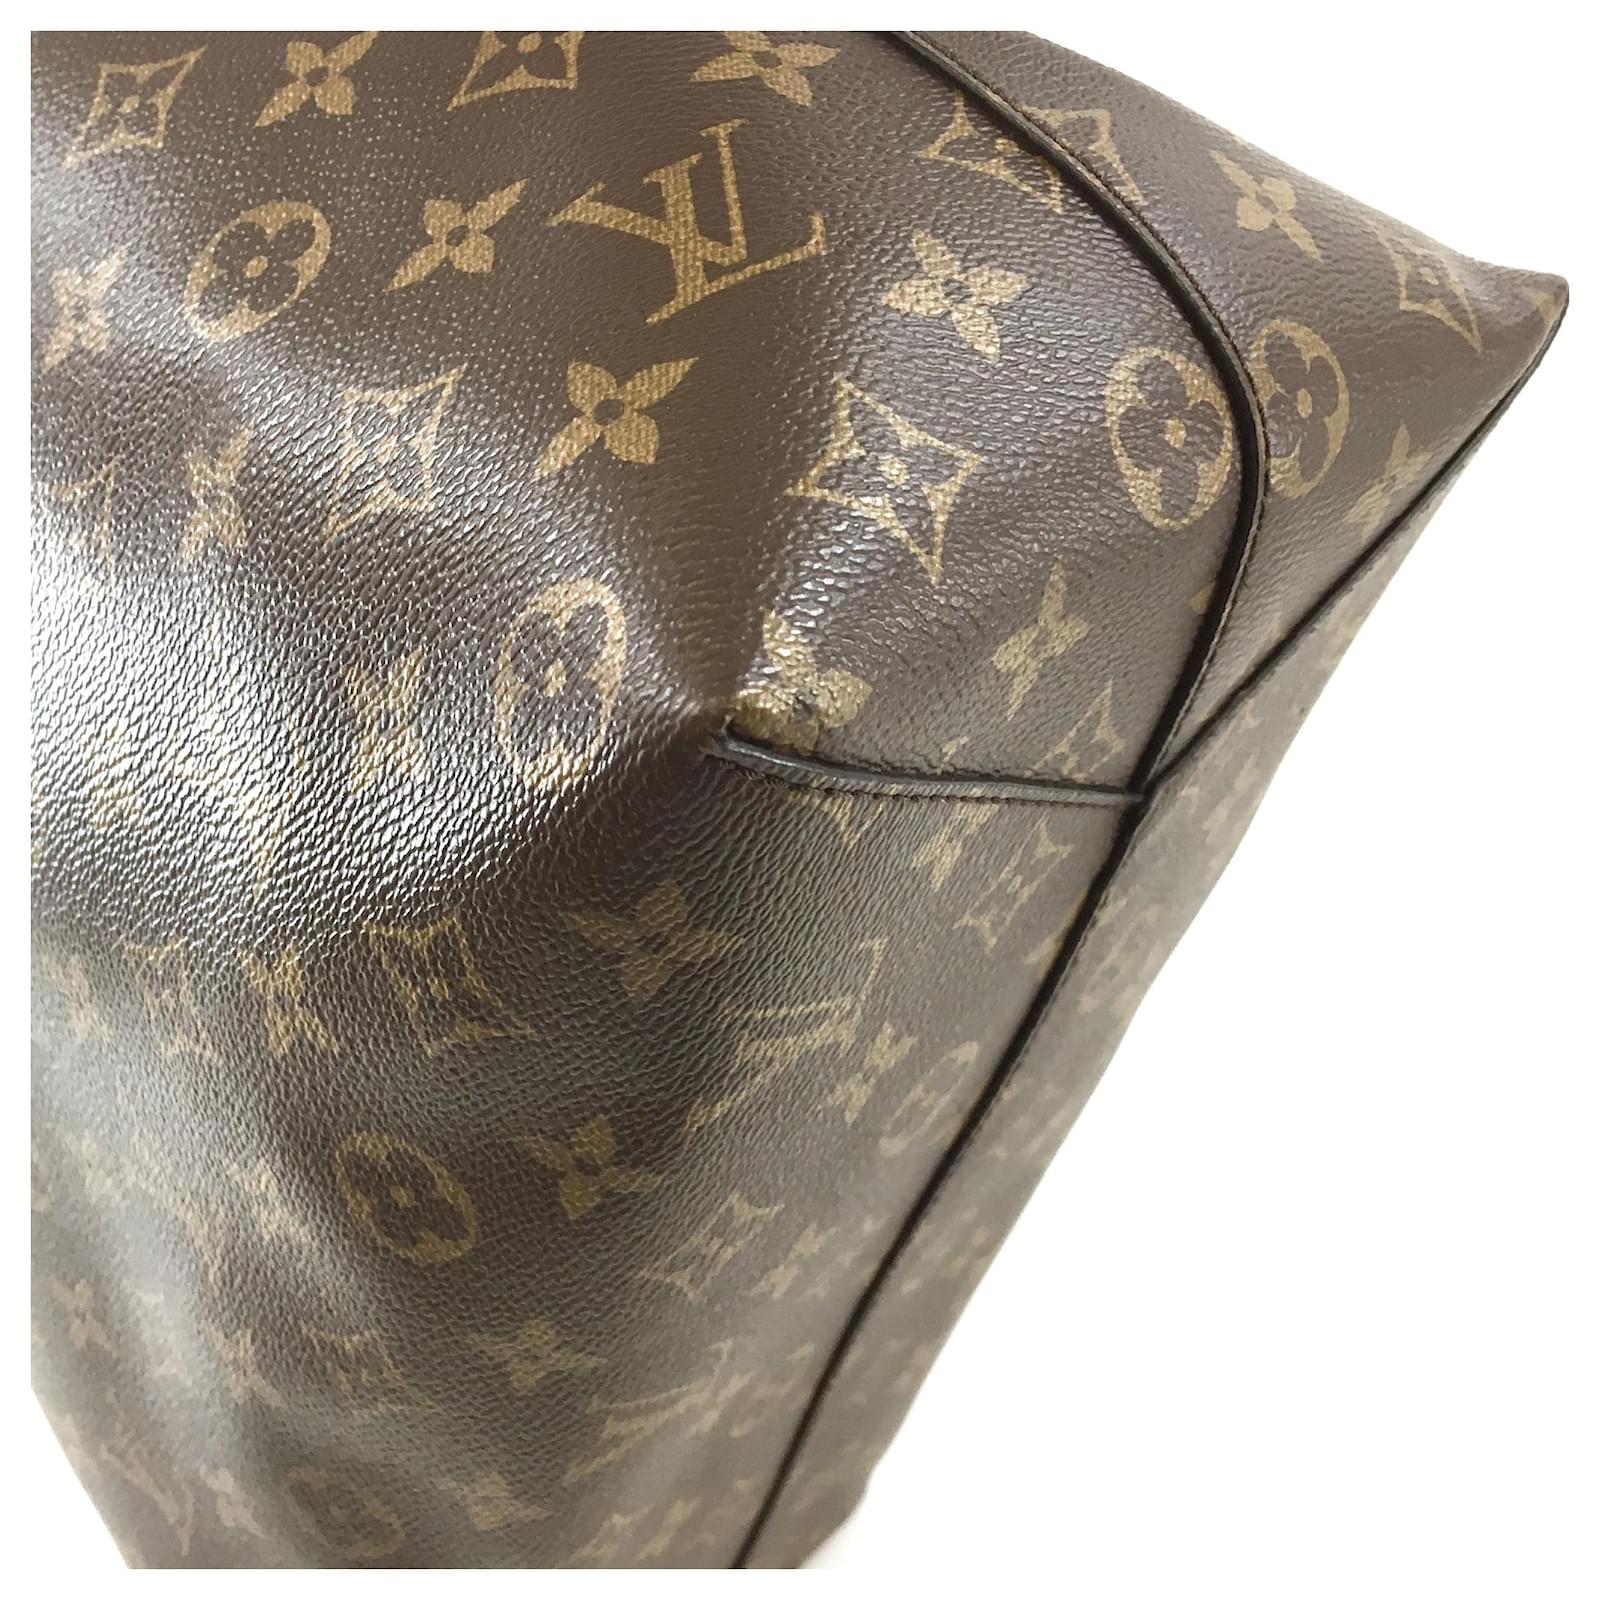 Louis Vuitton - Authenticated Flower Hobo Handbag - Leather Brown Plain for Women, Good Condition